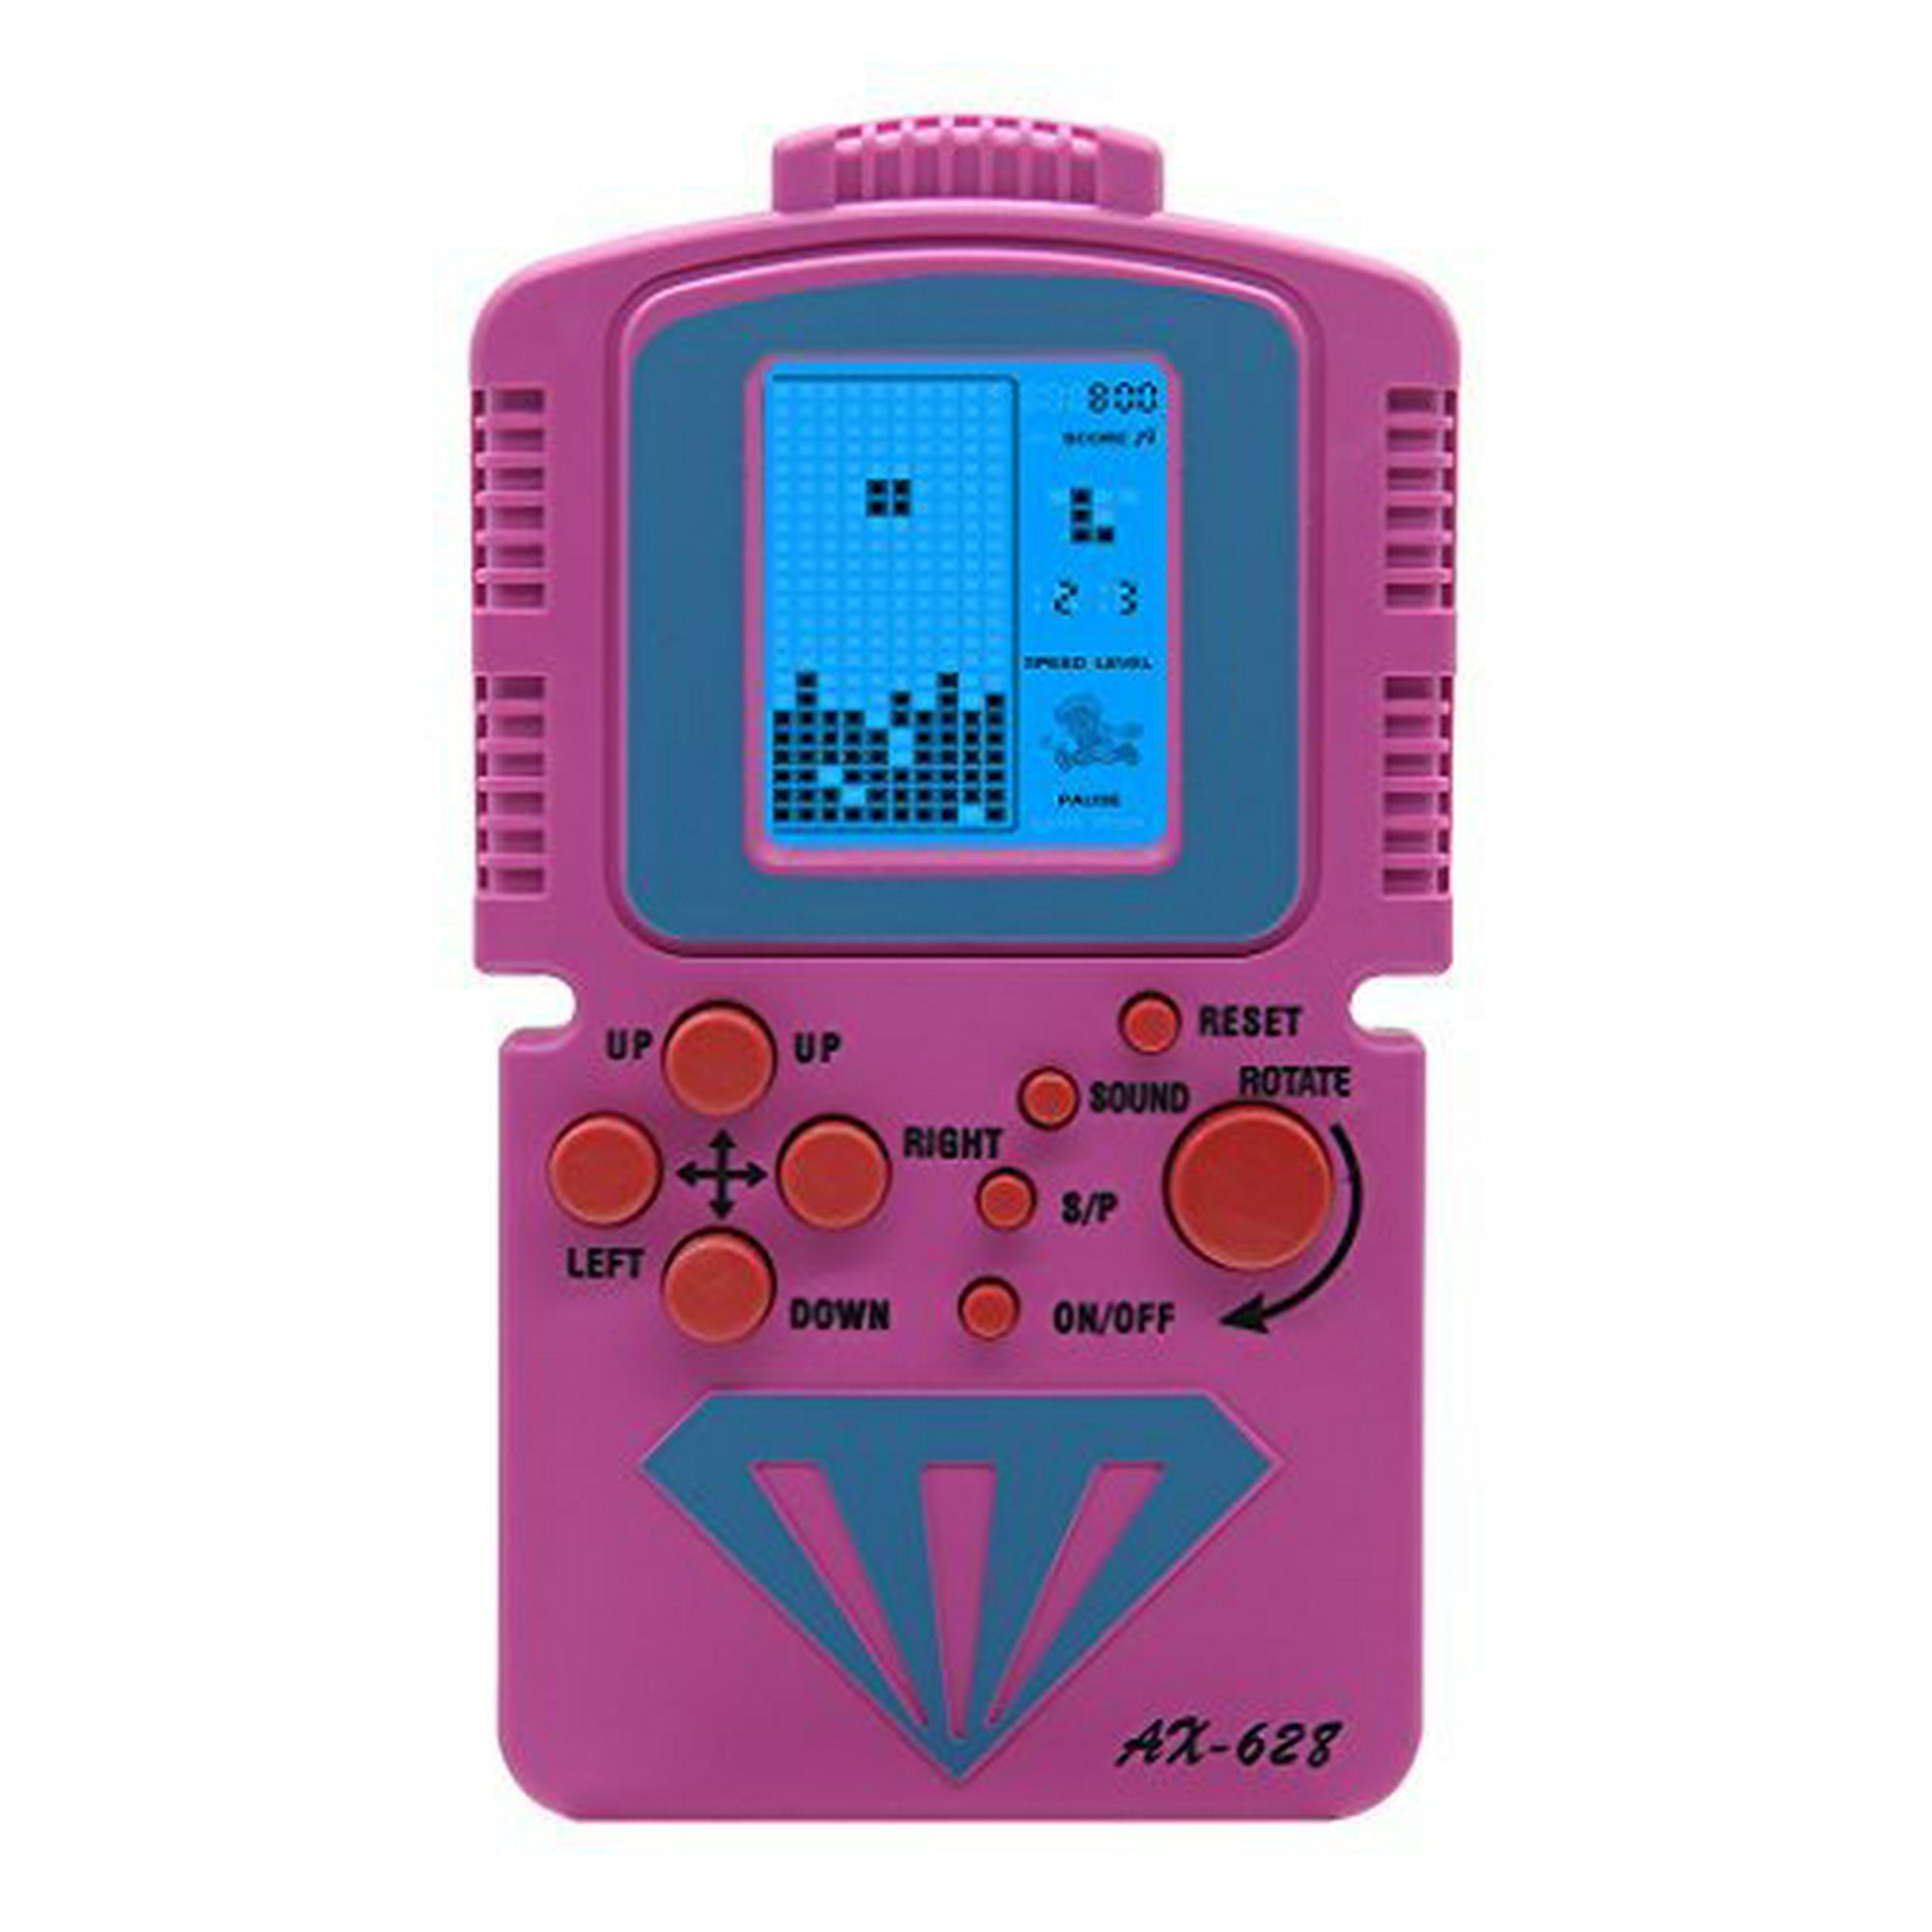 Pantalla Bluray Tetris incorporada 26 juegos (púrpura) JXD